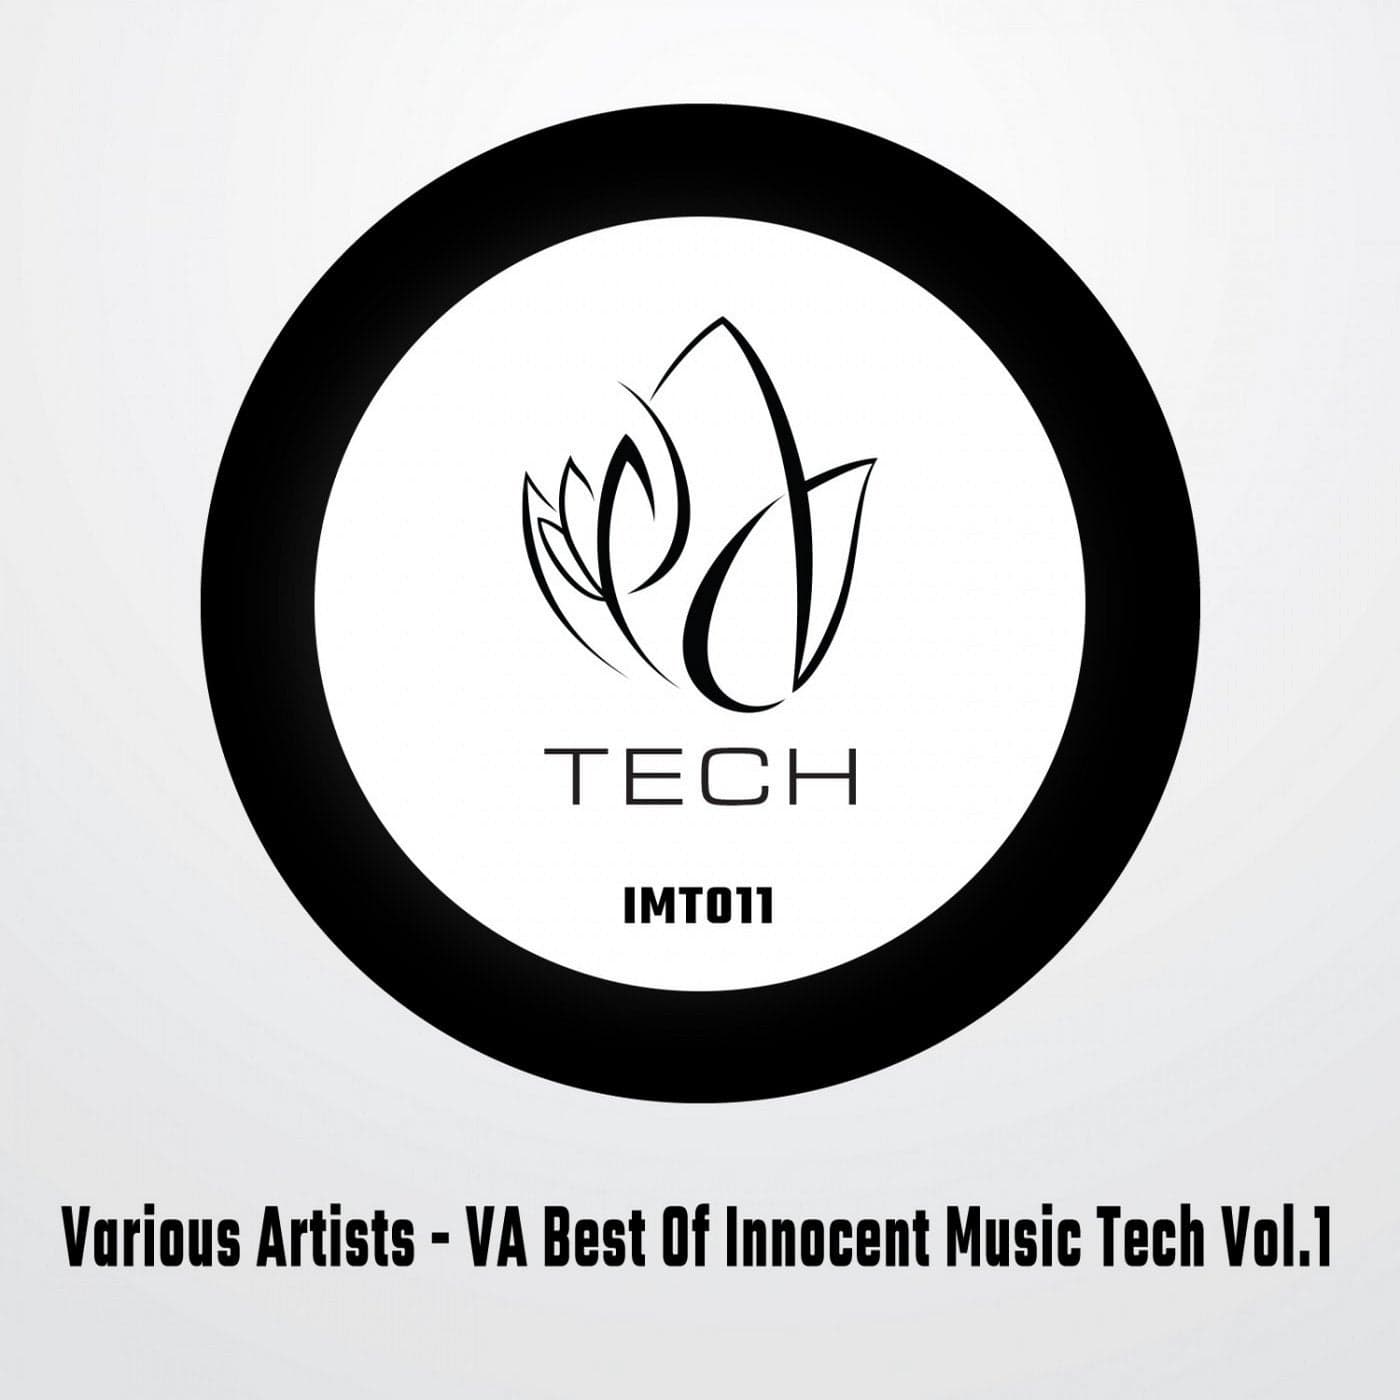 Download VA Best Of Innocent Music Tech Vol.1 on Electrobuzz